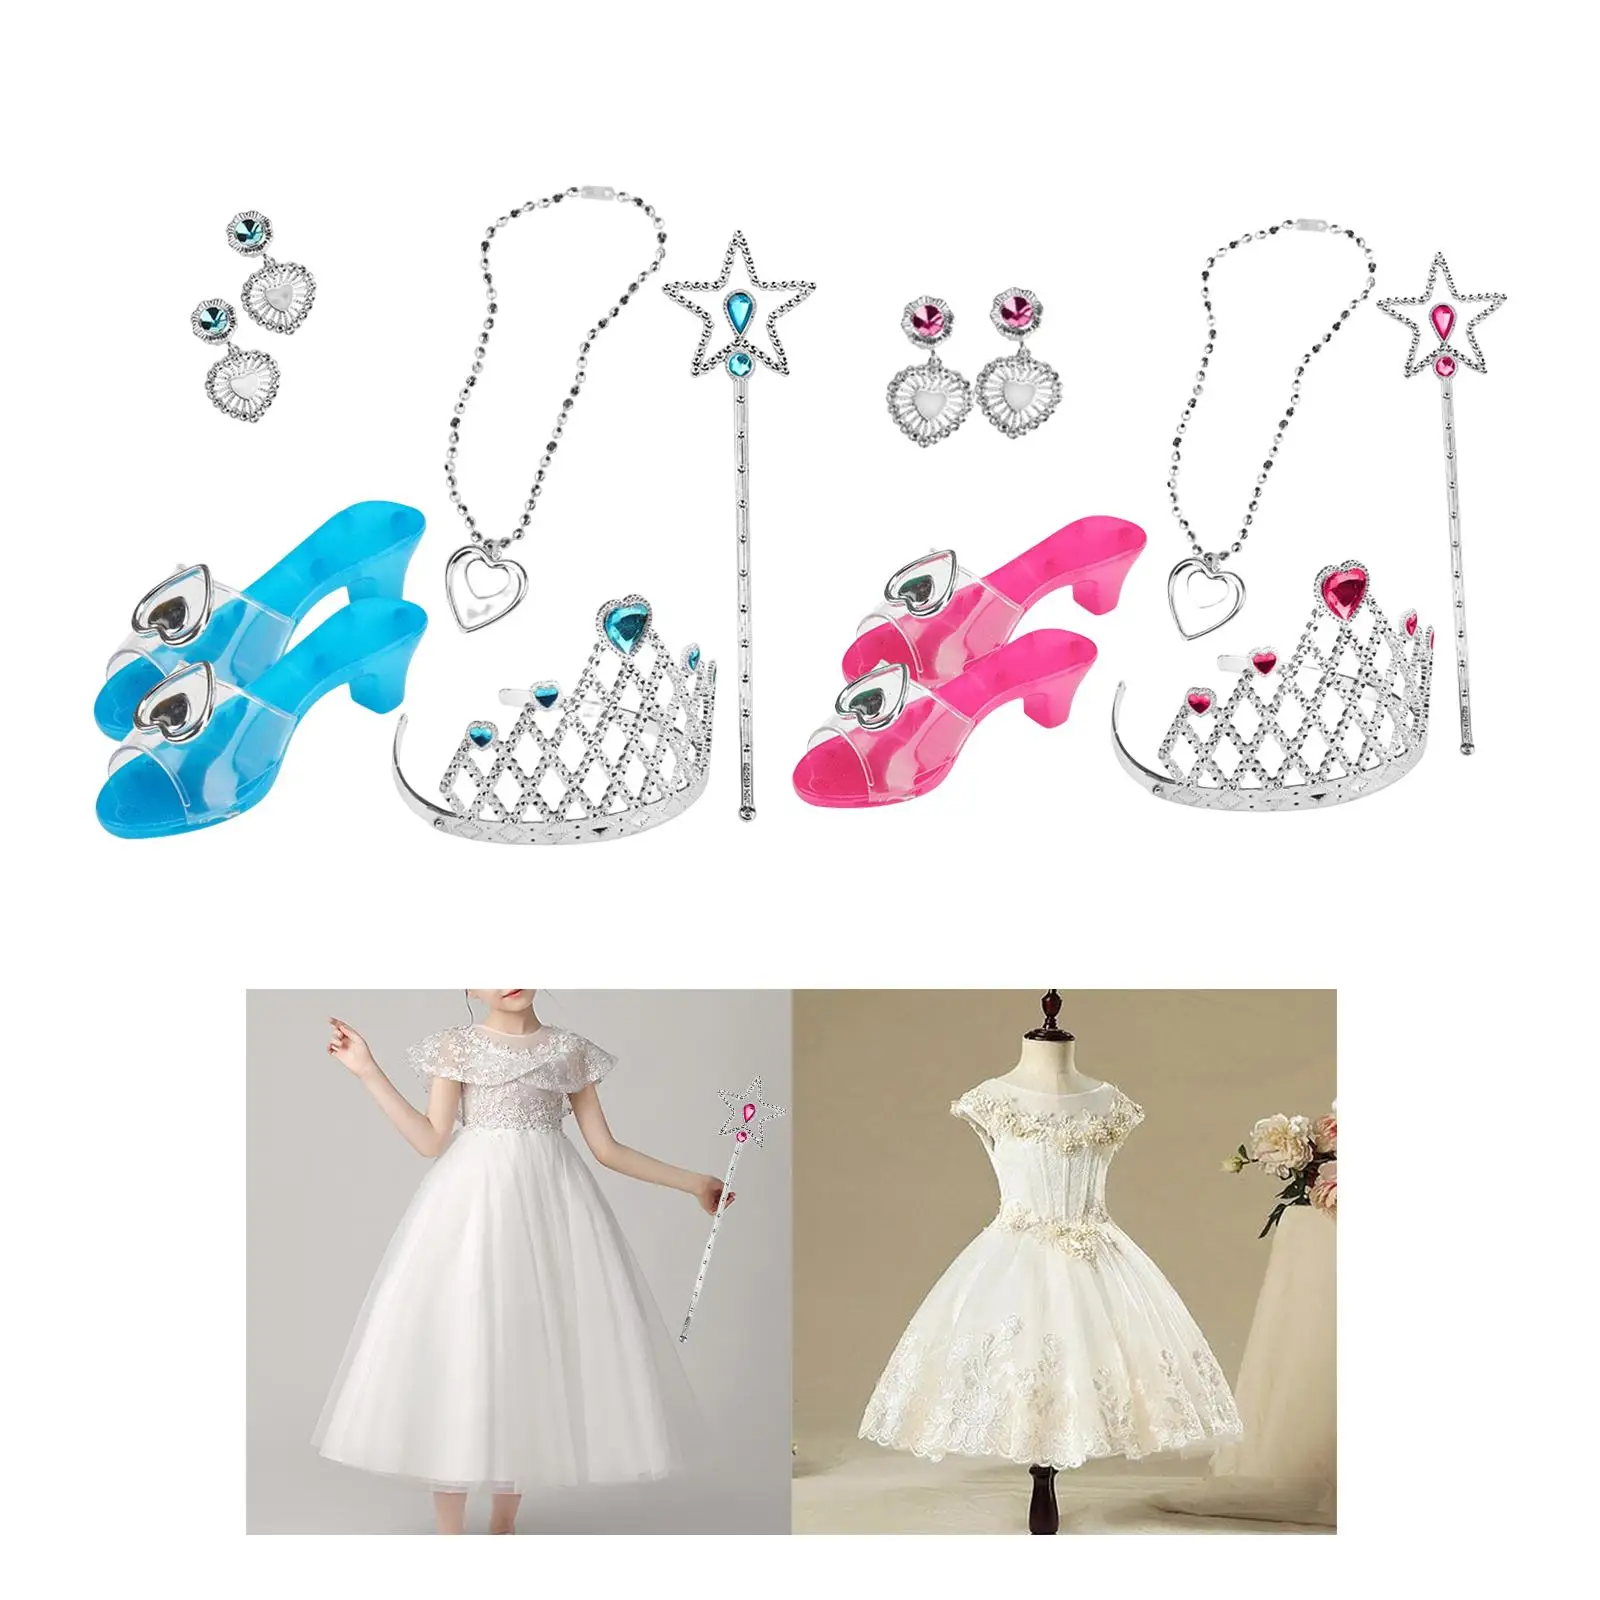 7 Pieces Little Girls Jewelry Toy Girls Pretend Play Set Fashion Accessories